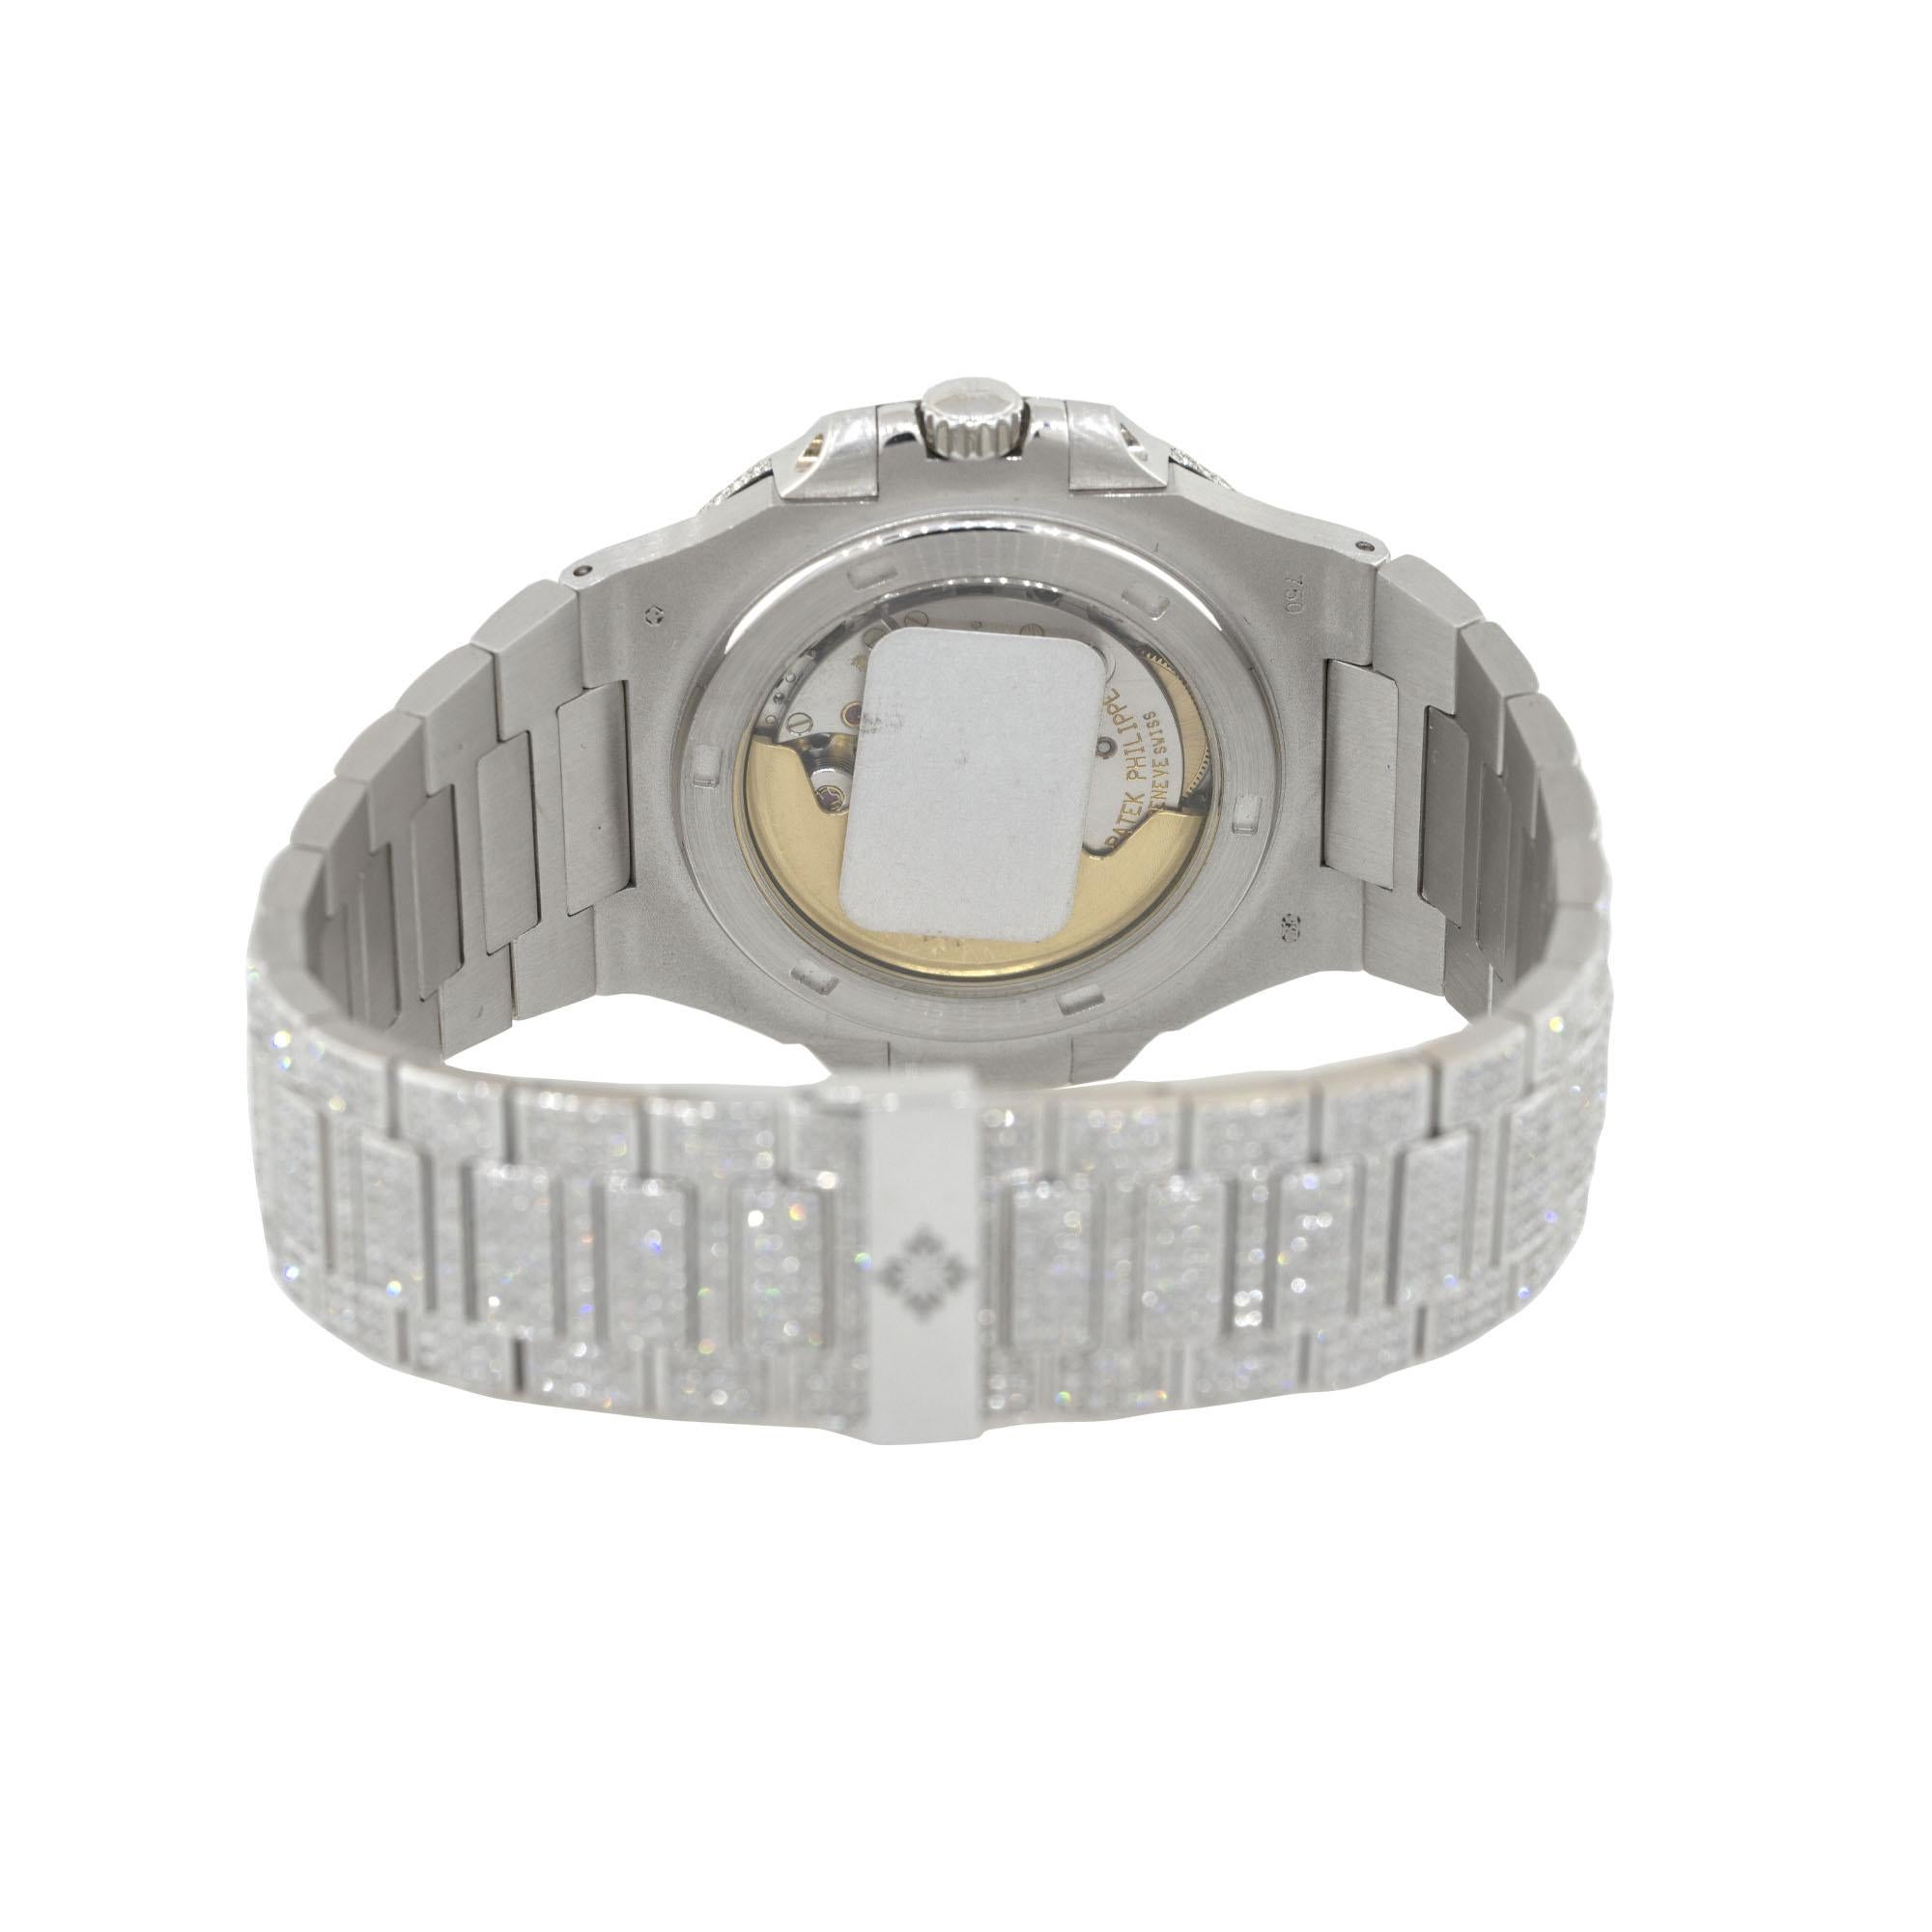 Round Cut Patek Philippe 5711 All Diamond Watch 18 Karat in Stock For Sale